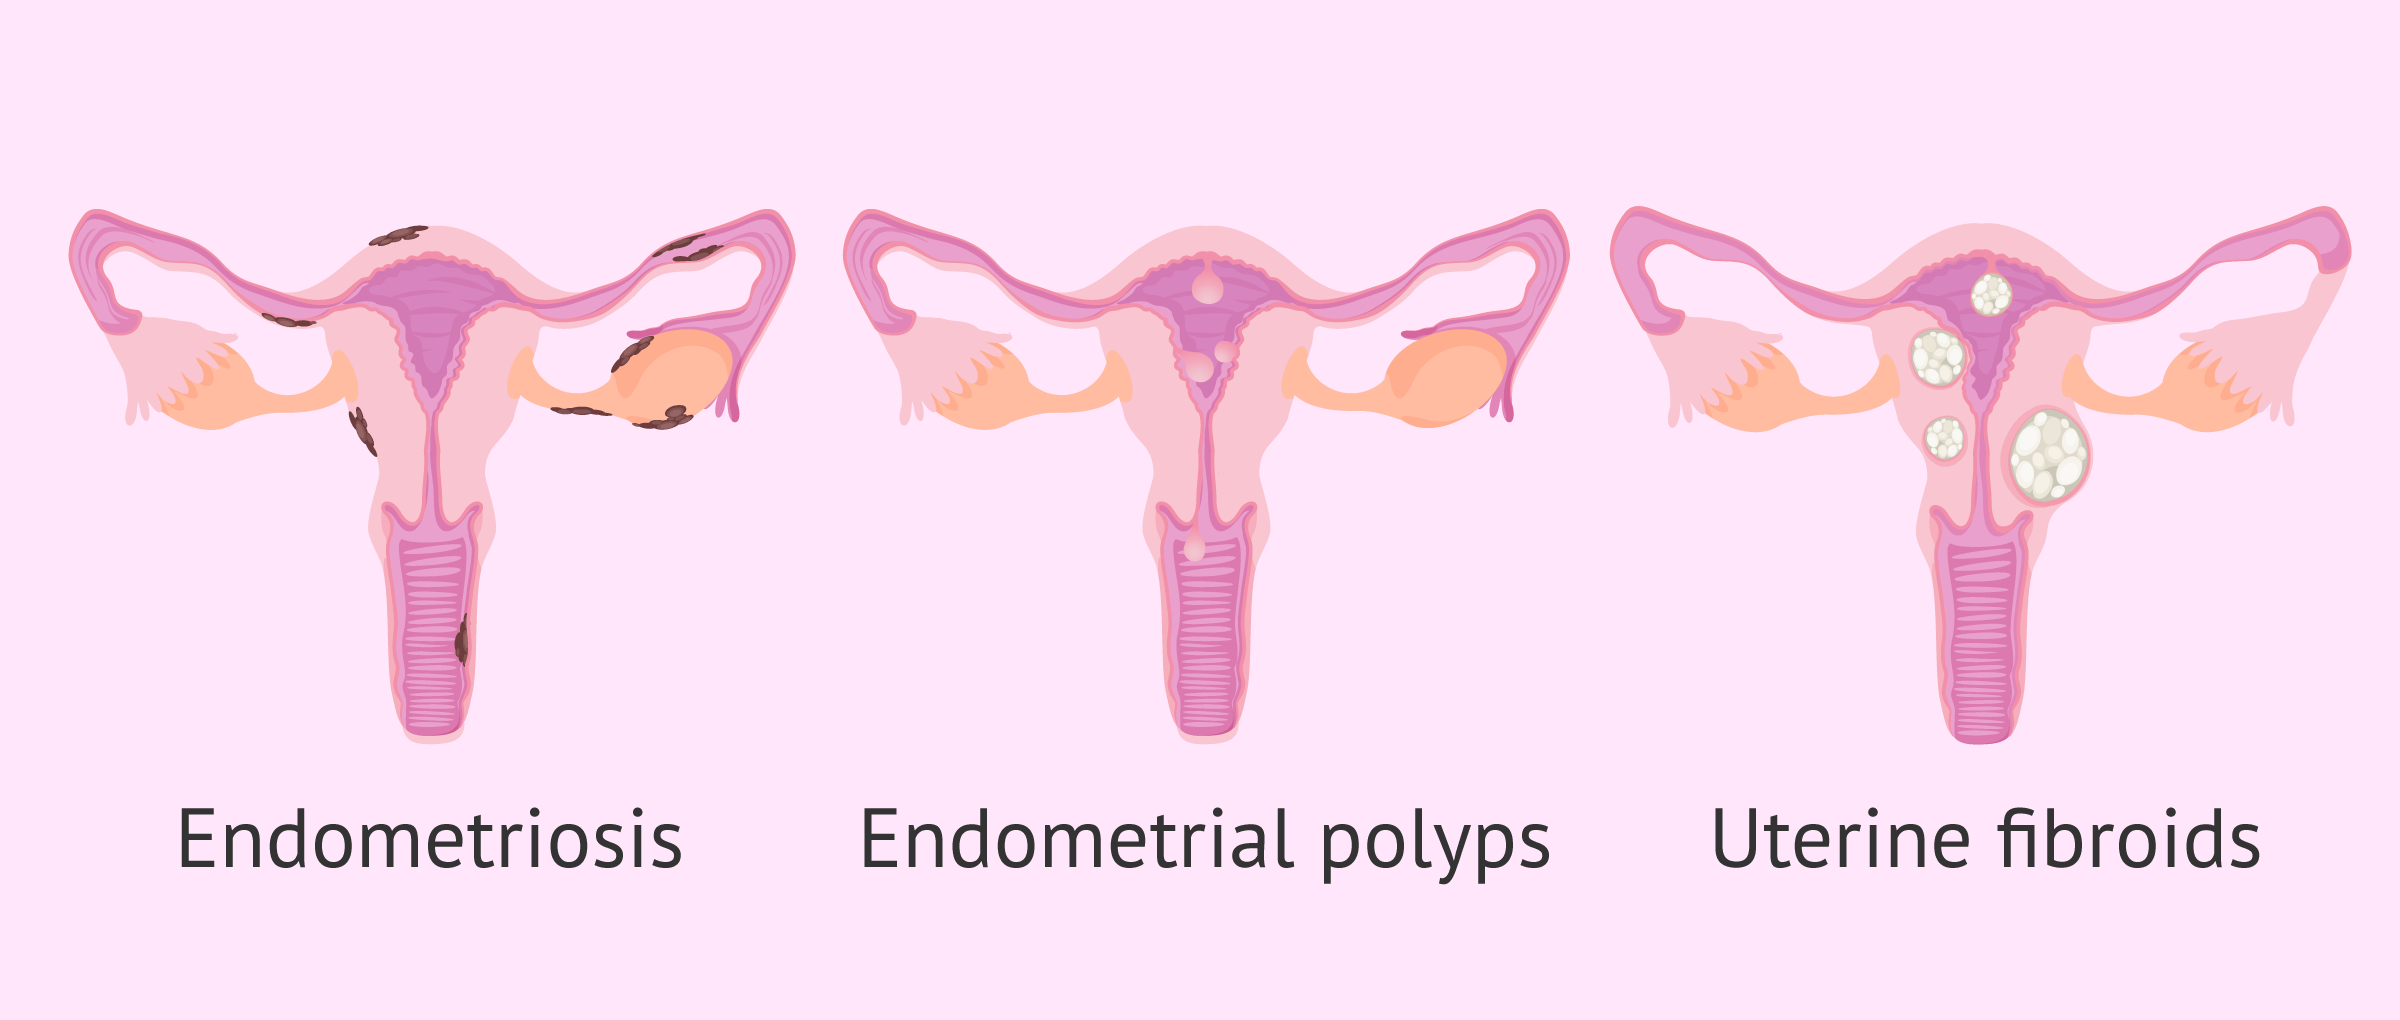 Pathologies affecting the endometrium